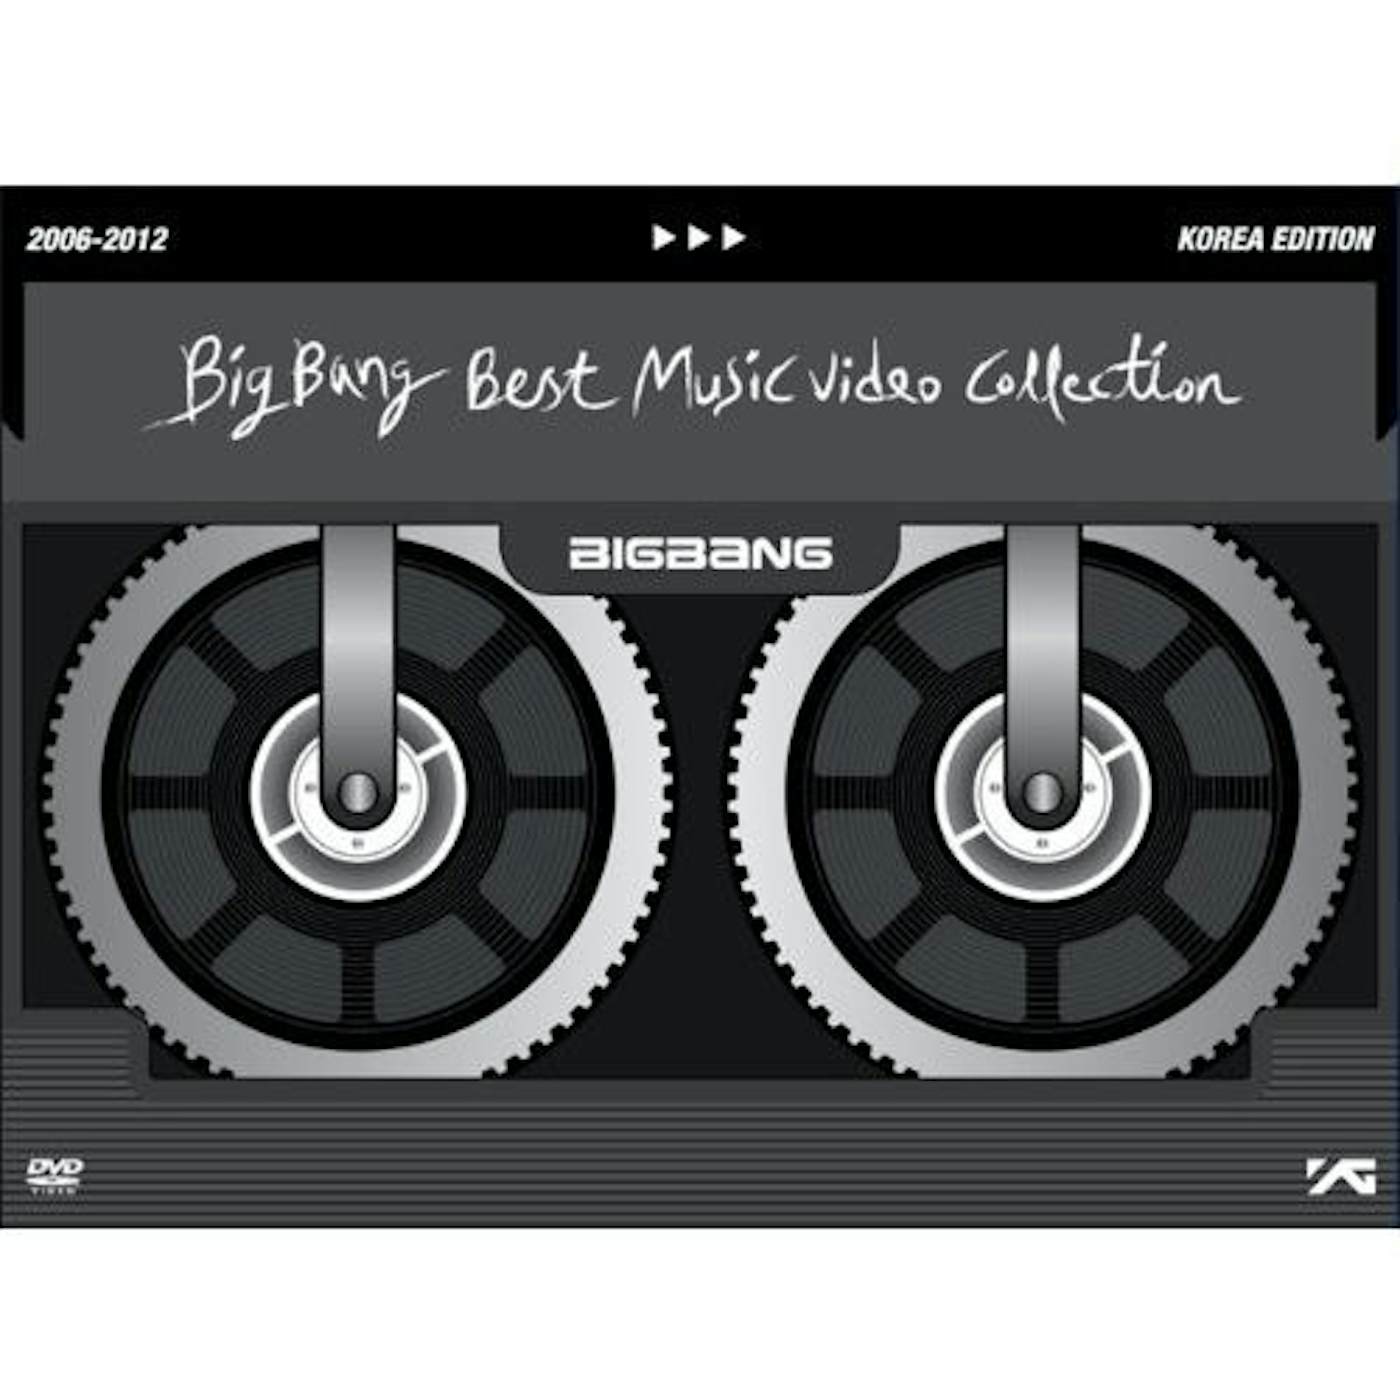 BIGBANG: BEST MUSIC VIDEO COLLECTION 2006 - 2012 DVD